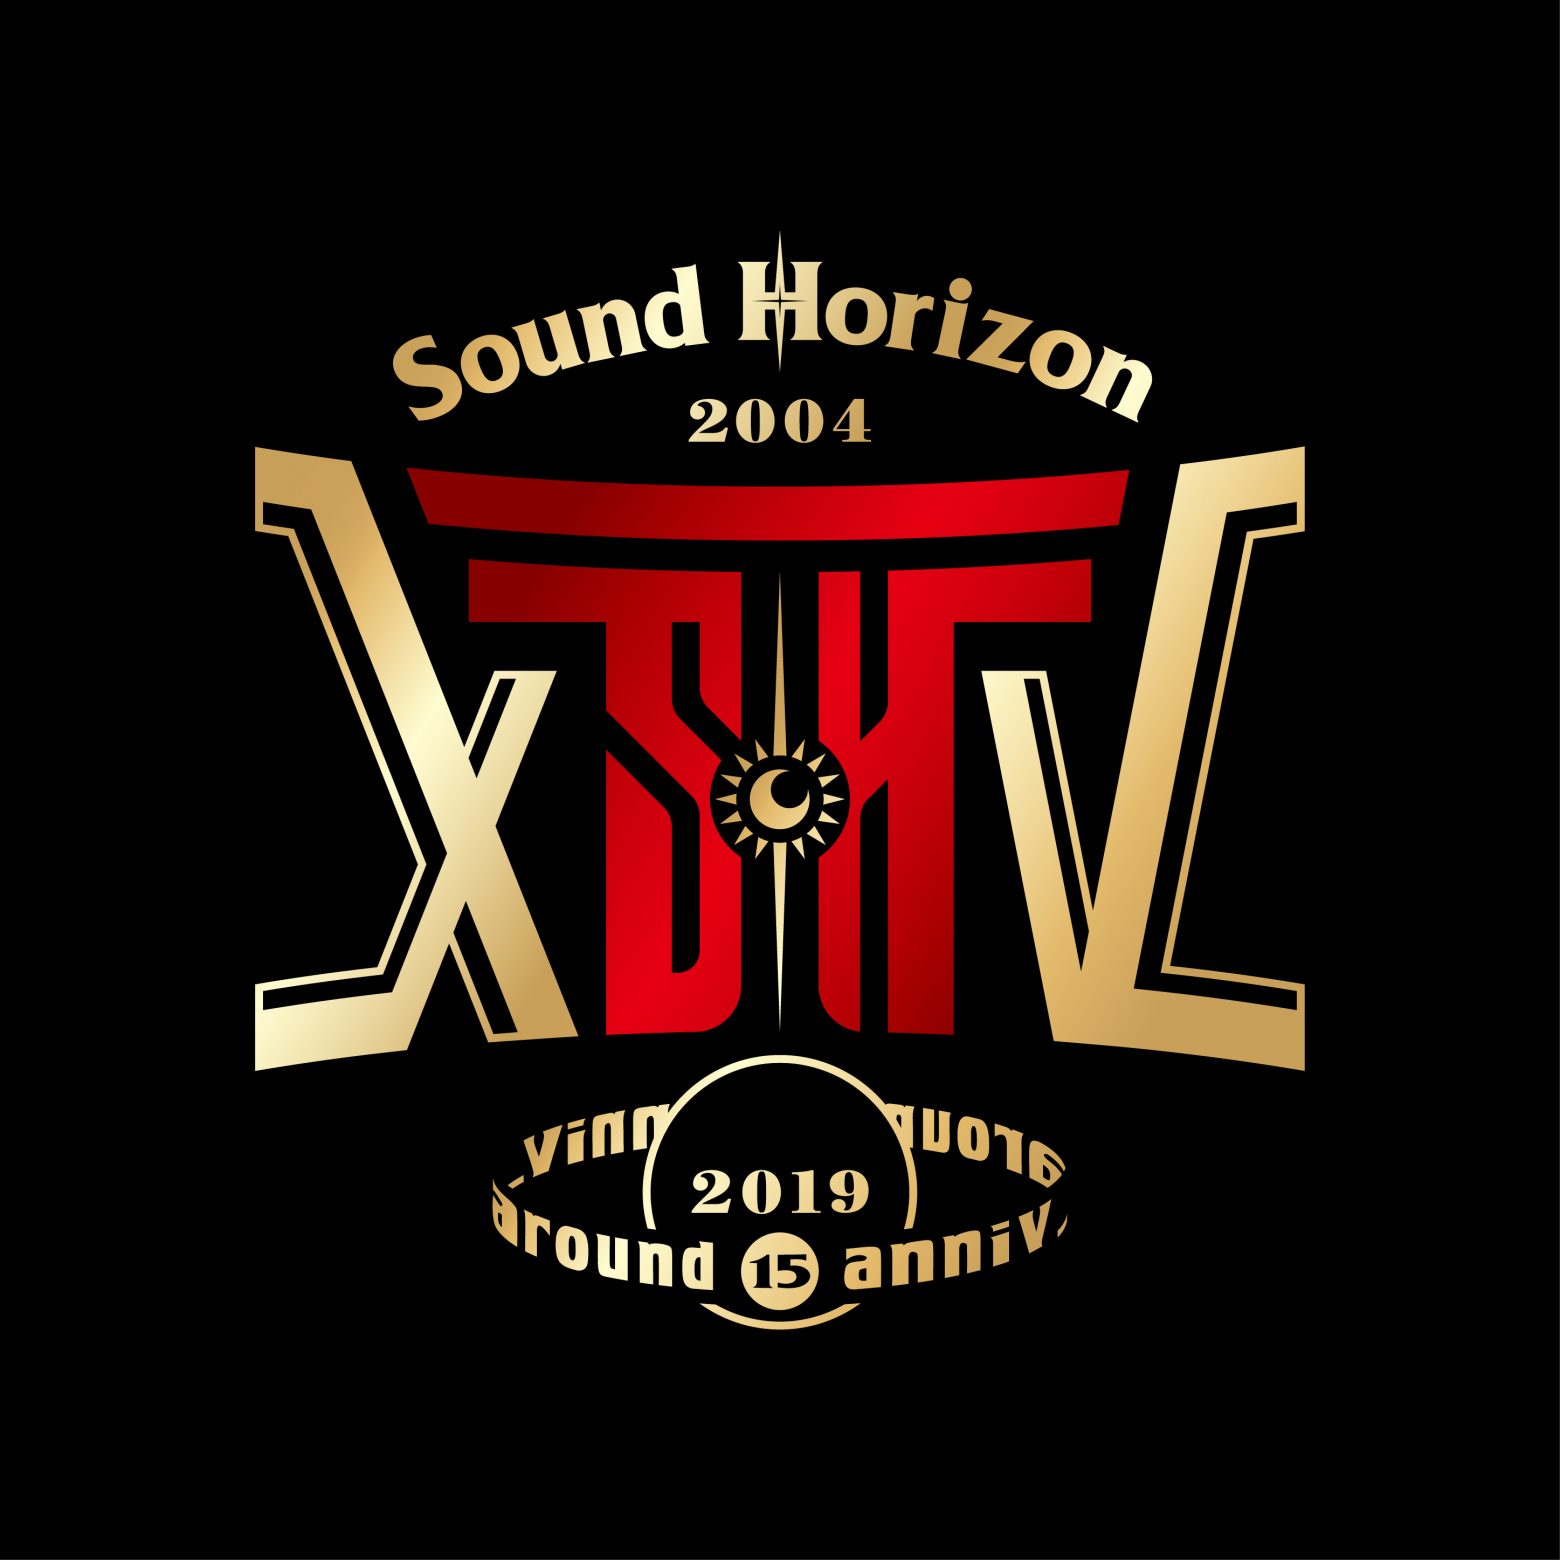 Sound Horizon Around15周年大特集 各界の著名人からの お祝いメッサージュ 企画第2弾は梶浦由記ら5名から到着 Musicman